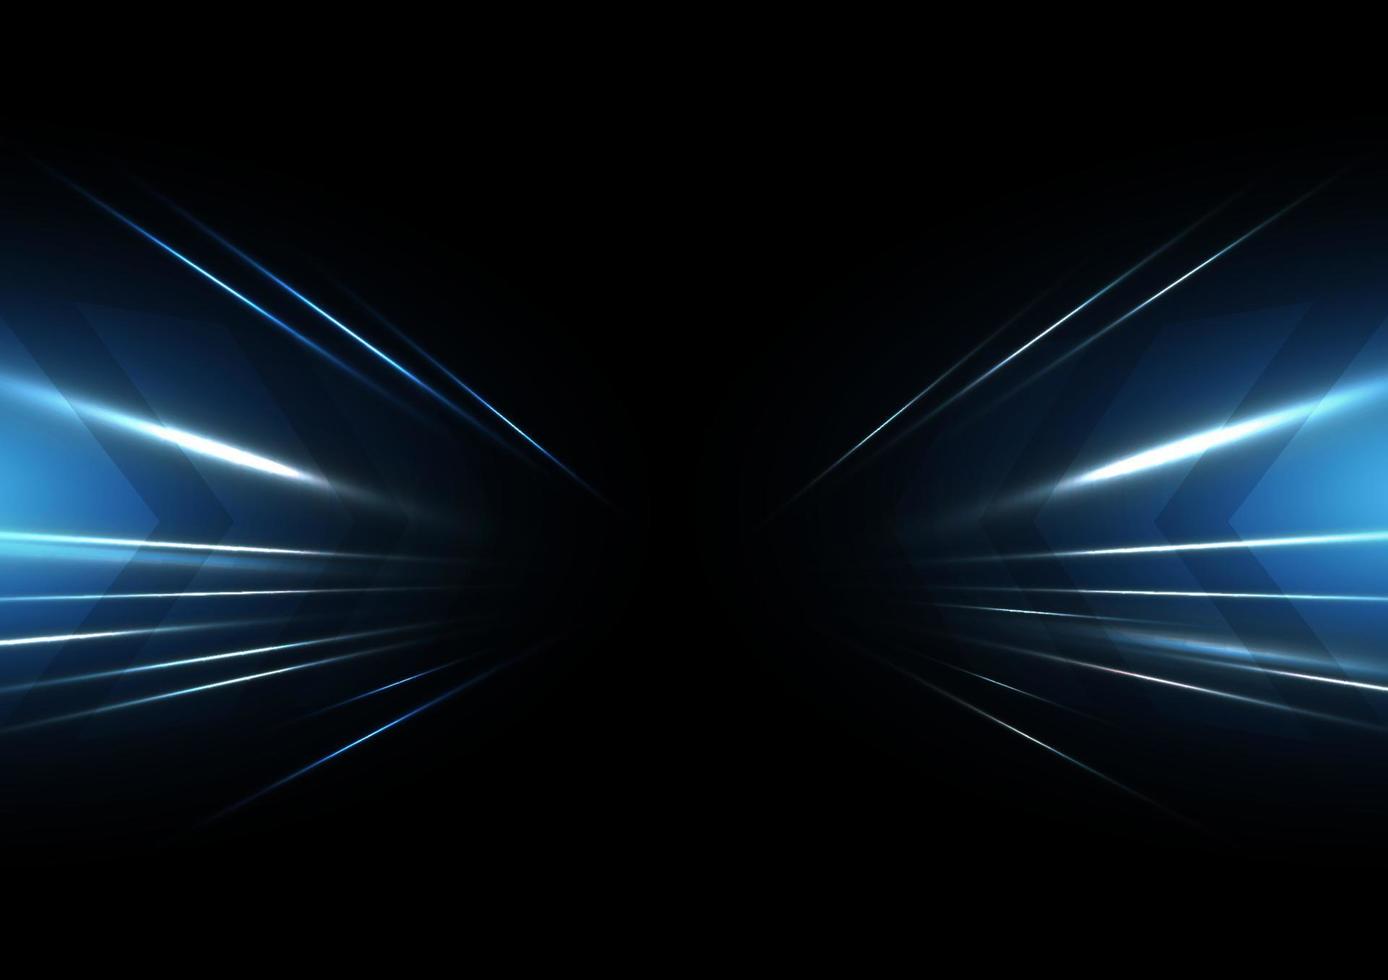 abstrakt blå hastighet ljuseffekt på svart bakgrund vektorillustration. vektor